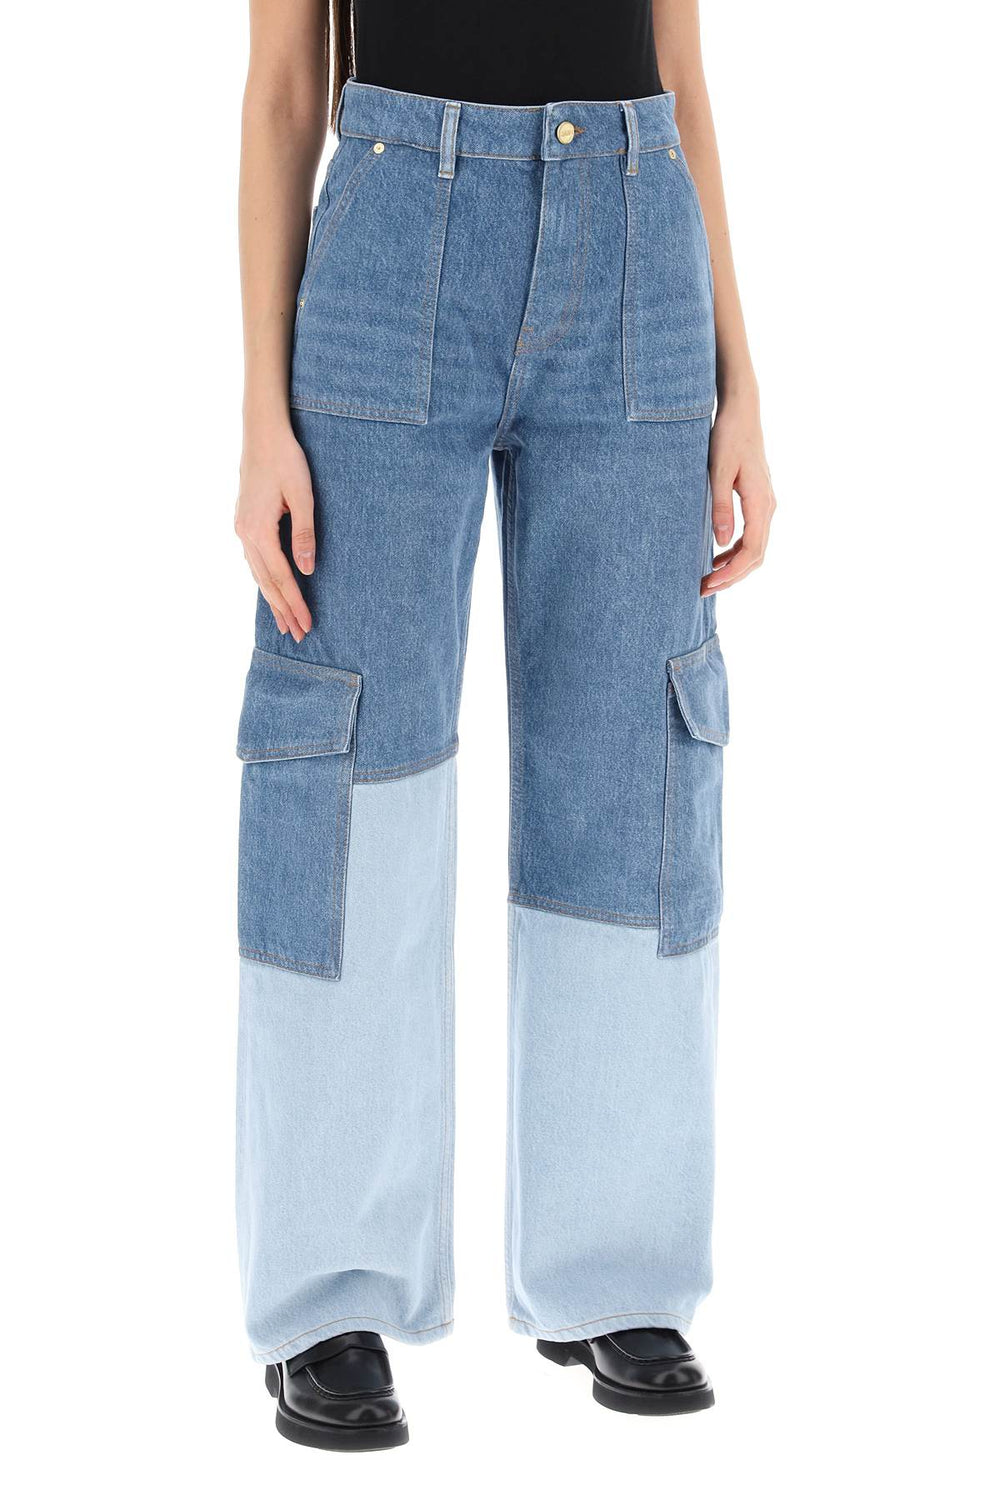 angi jeans-1